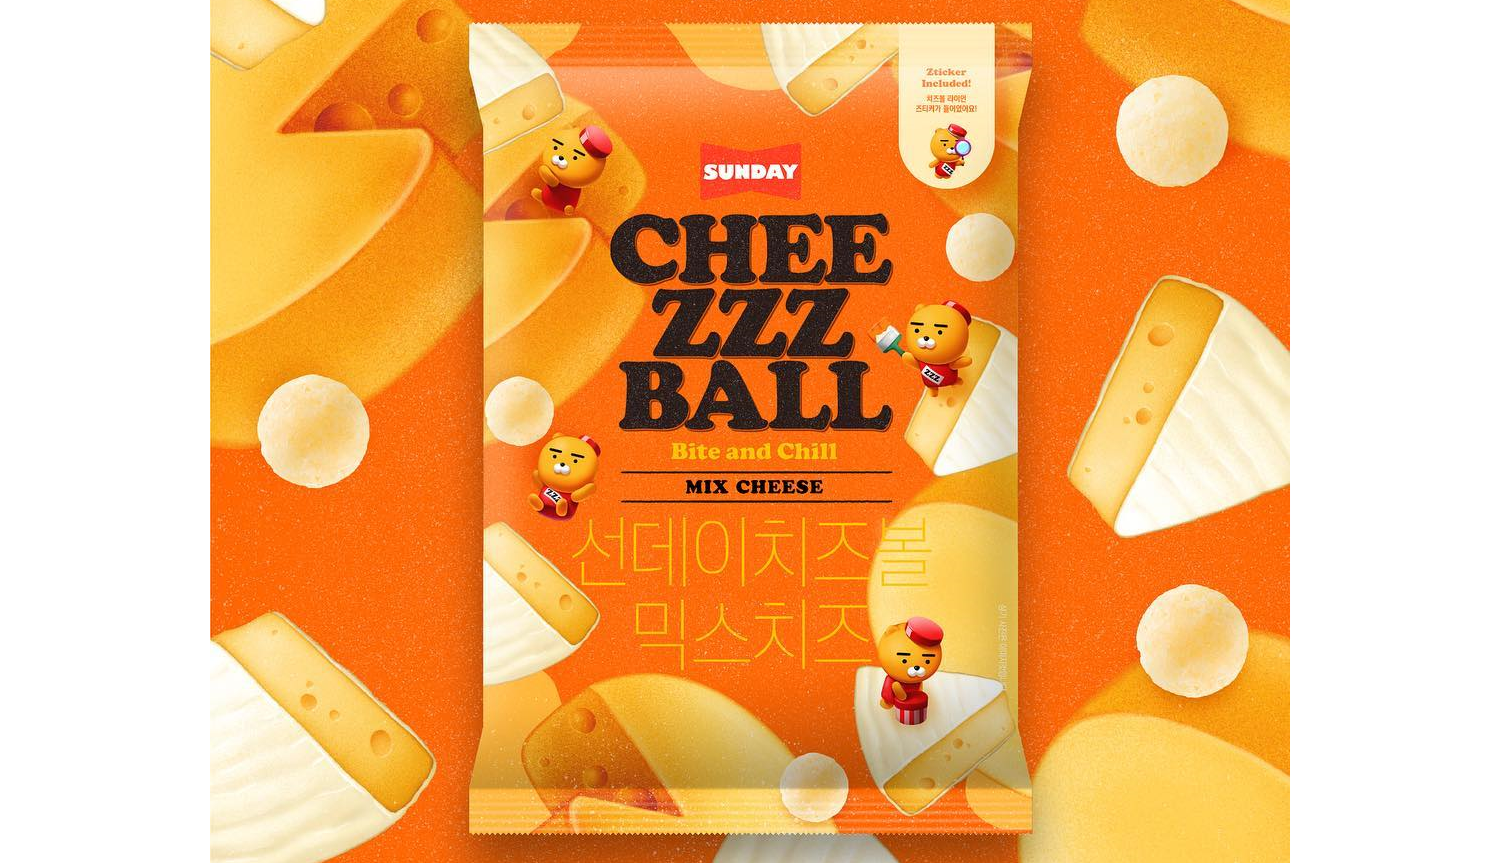 SUNDAY CHEE ZZZ BALL3